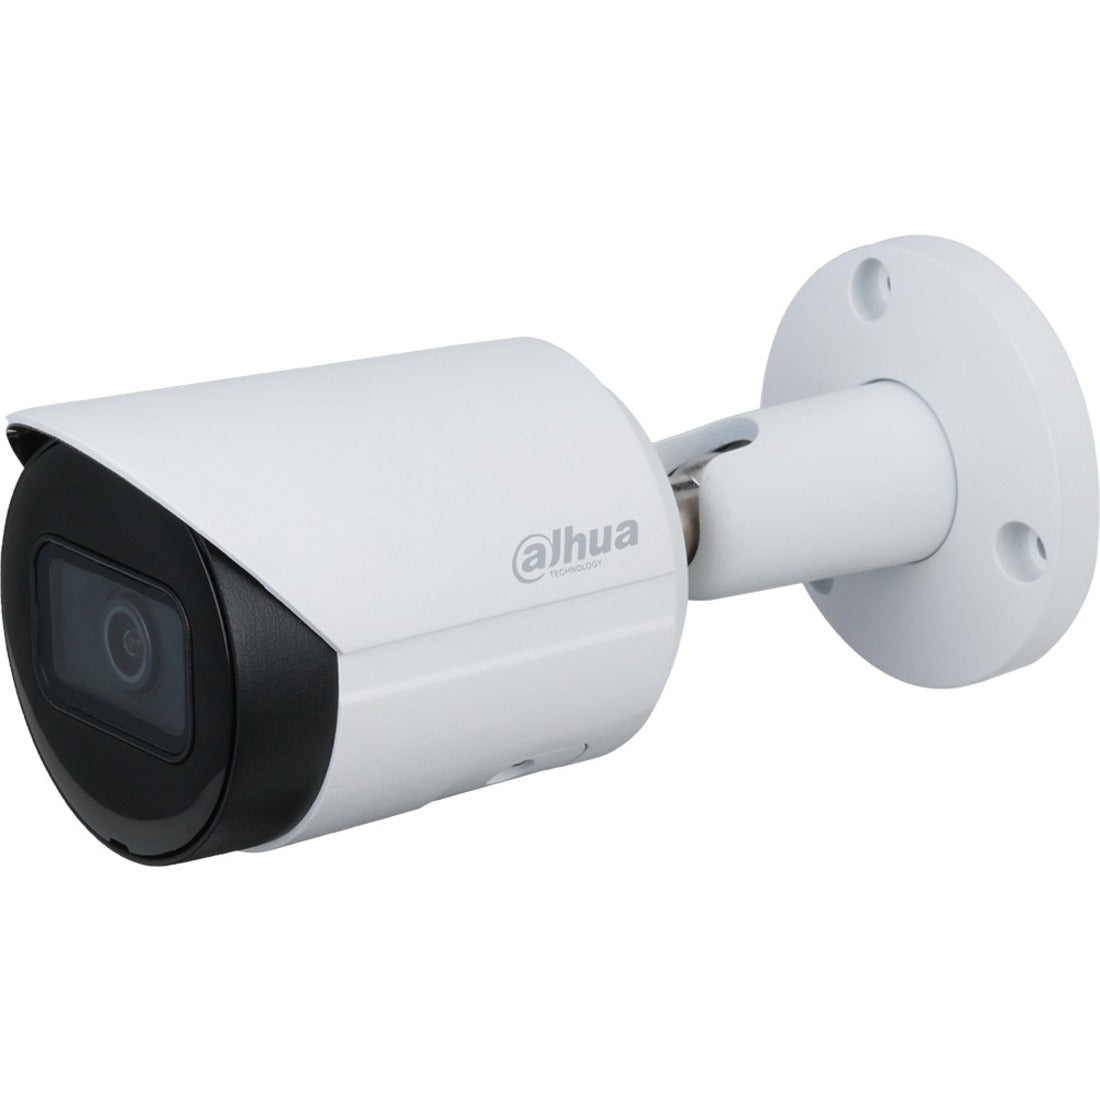 Dahua N42BD32 4 MP Fixed Bullet Network Camera, 2.8mm Lens, Smart H.265+, IP67 Outdoor, 5 Year Warranty